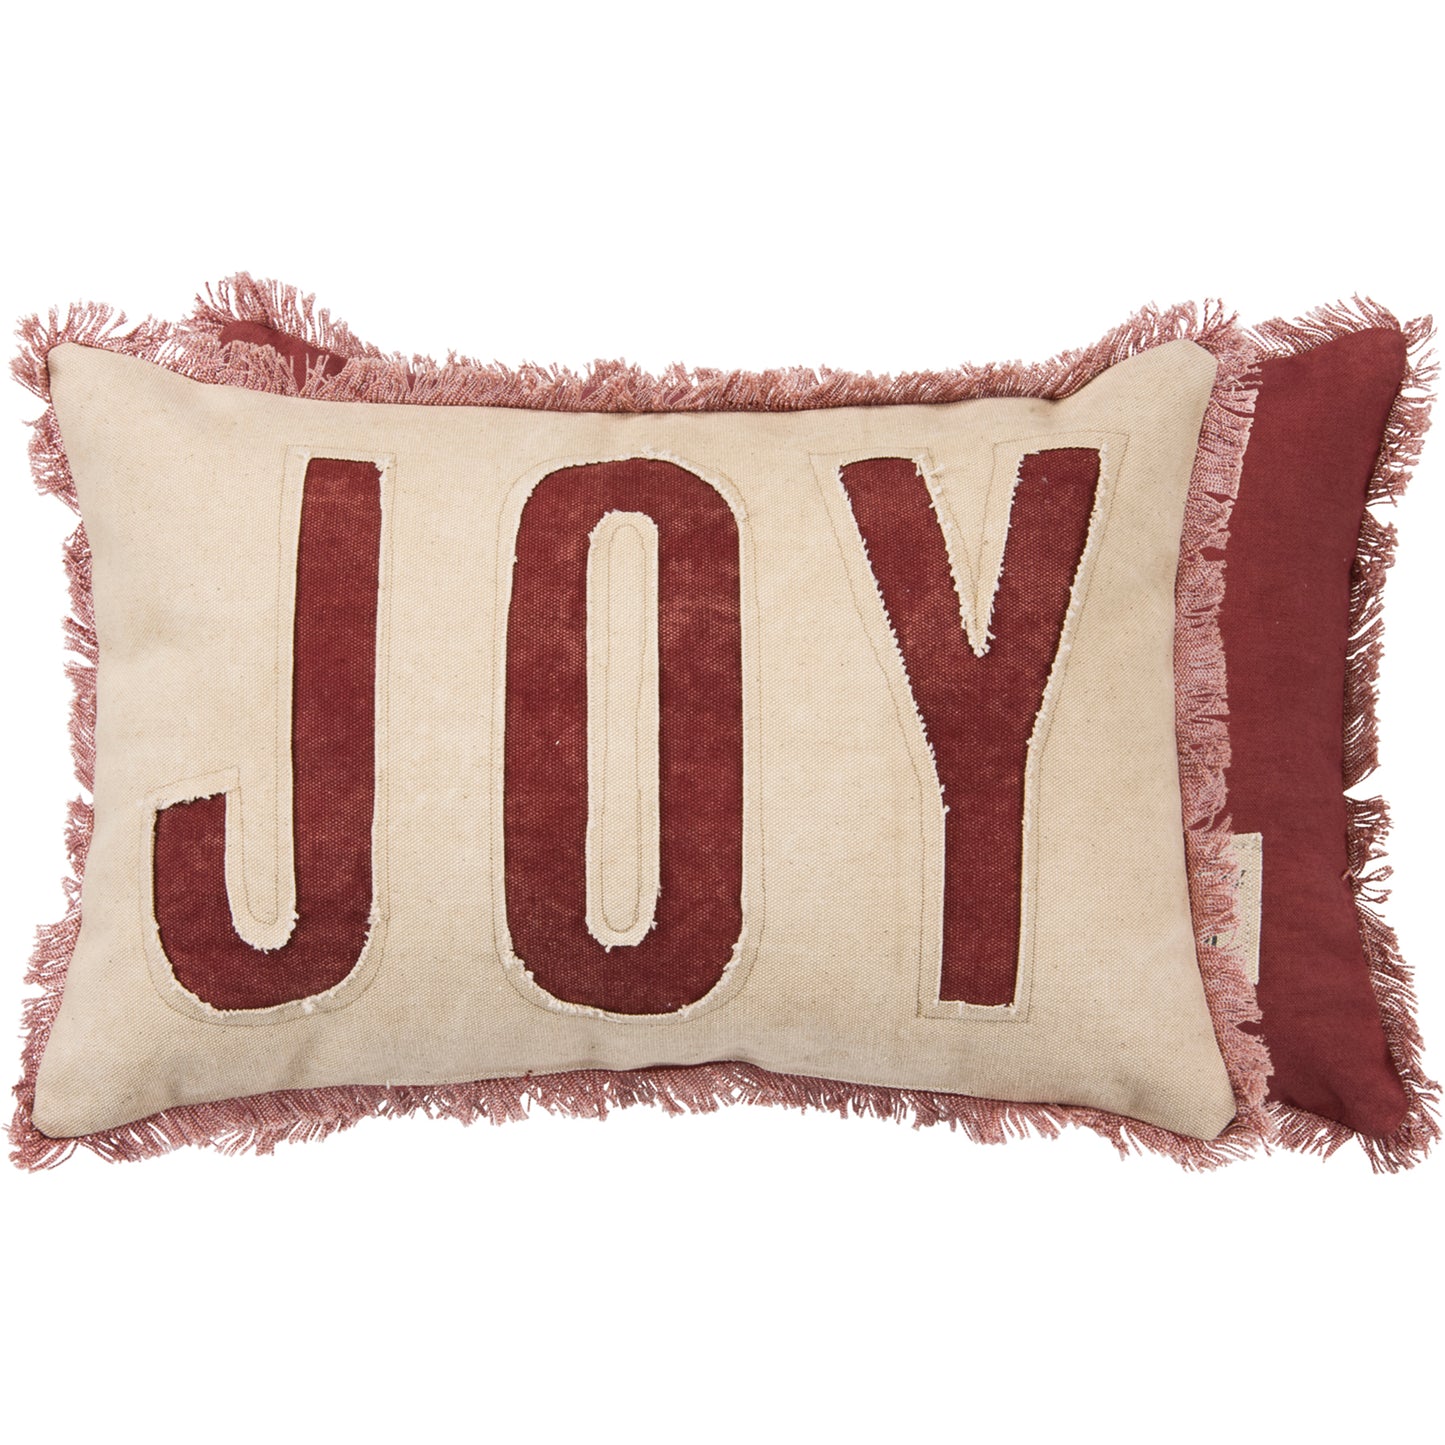 Joy Red Pillow